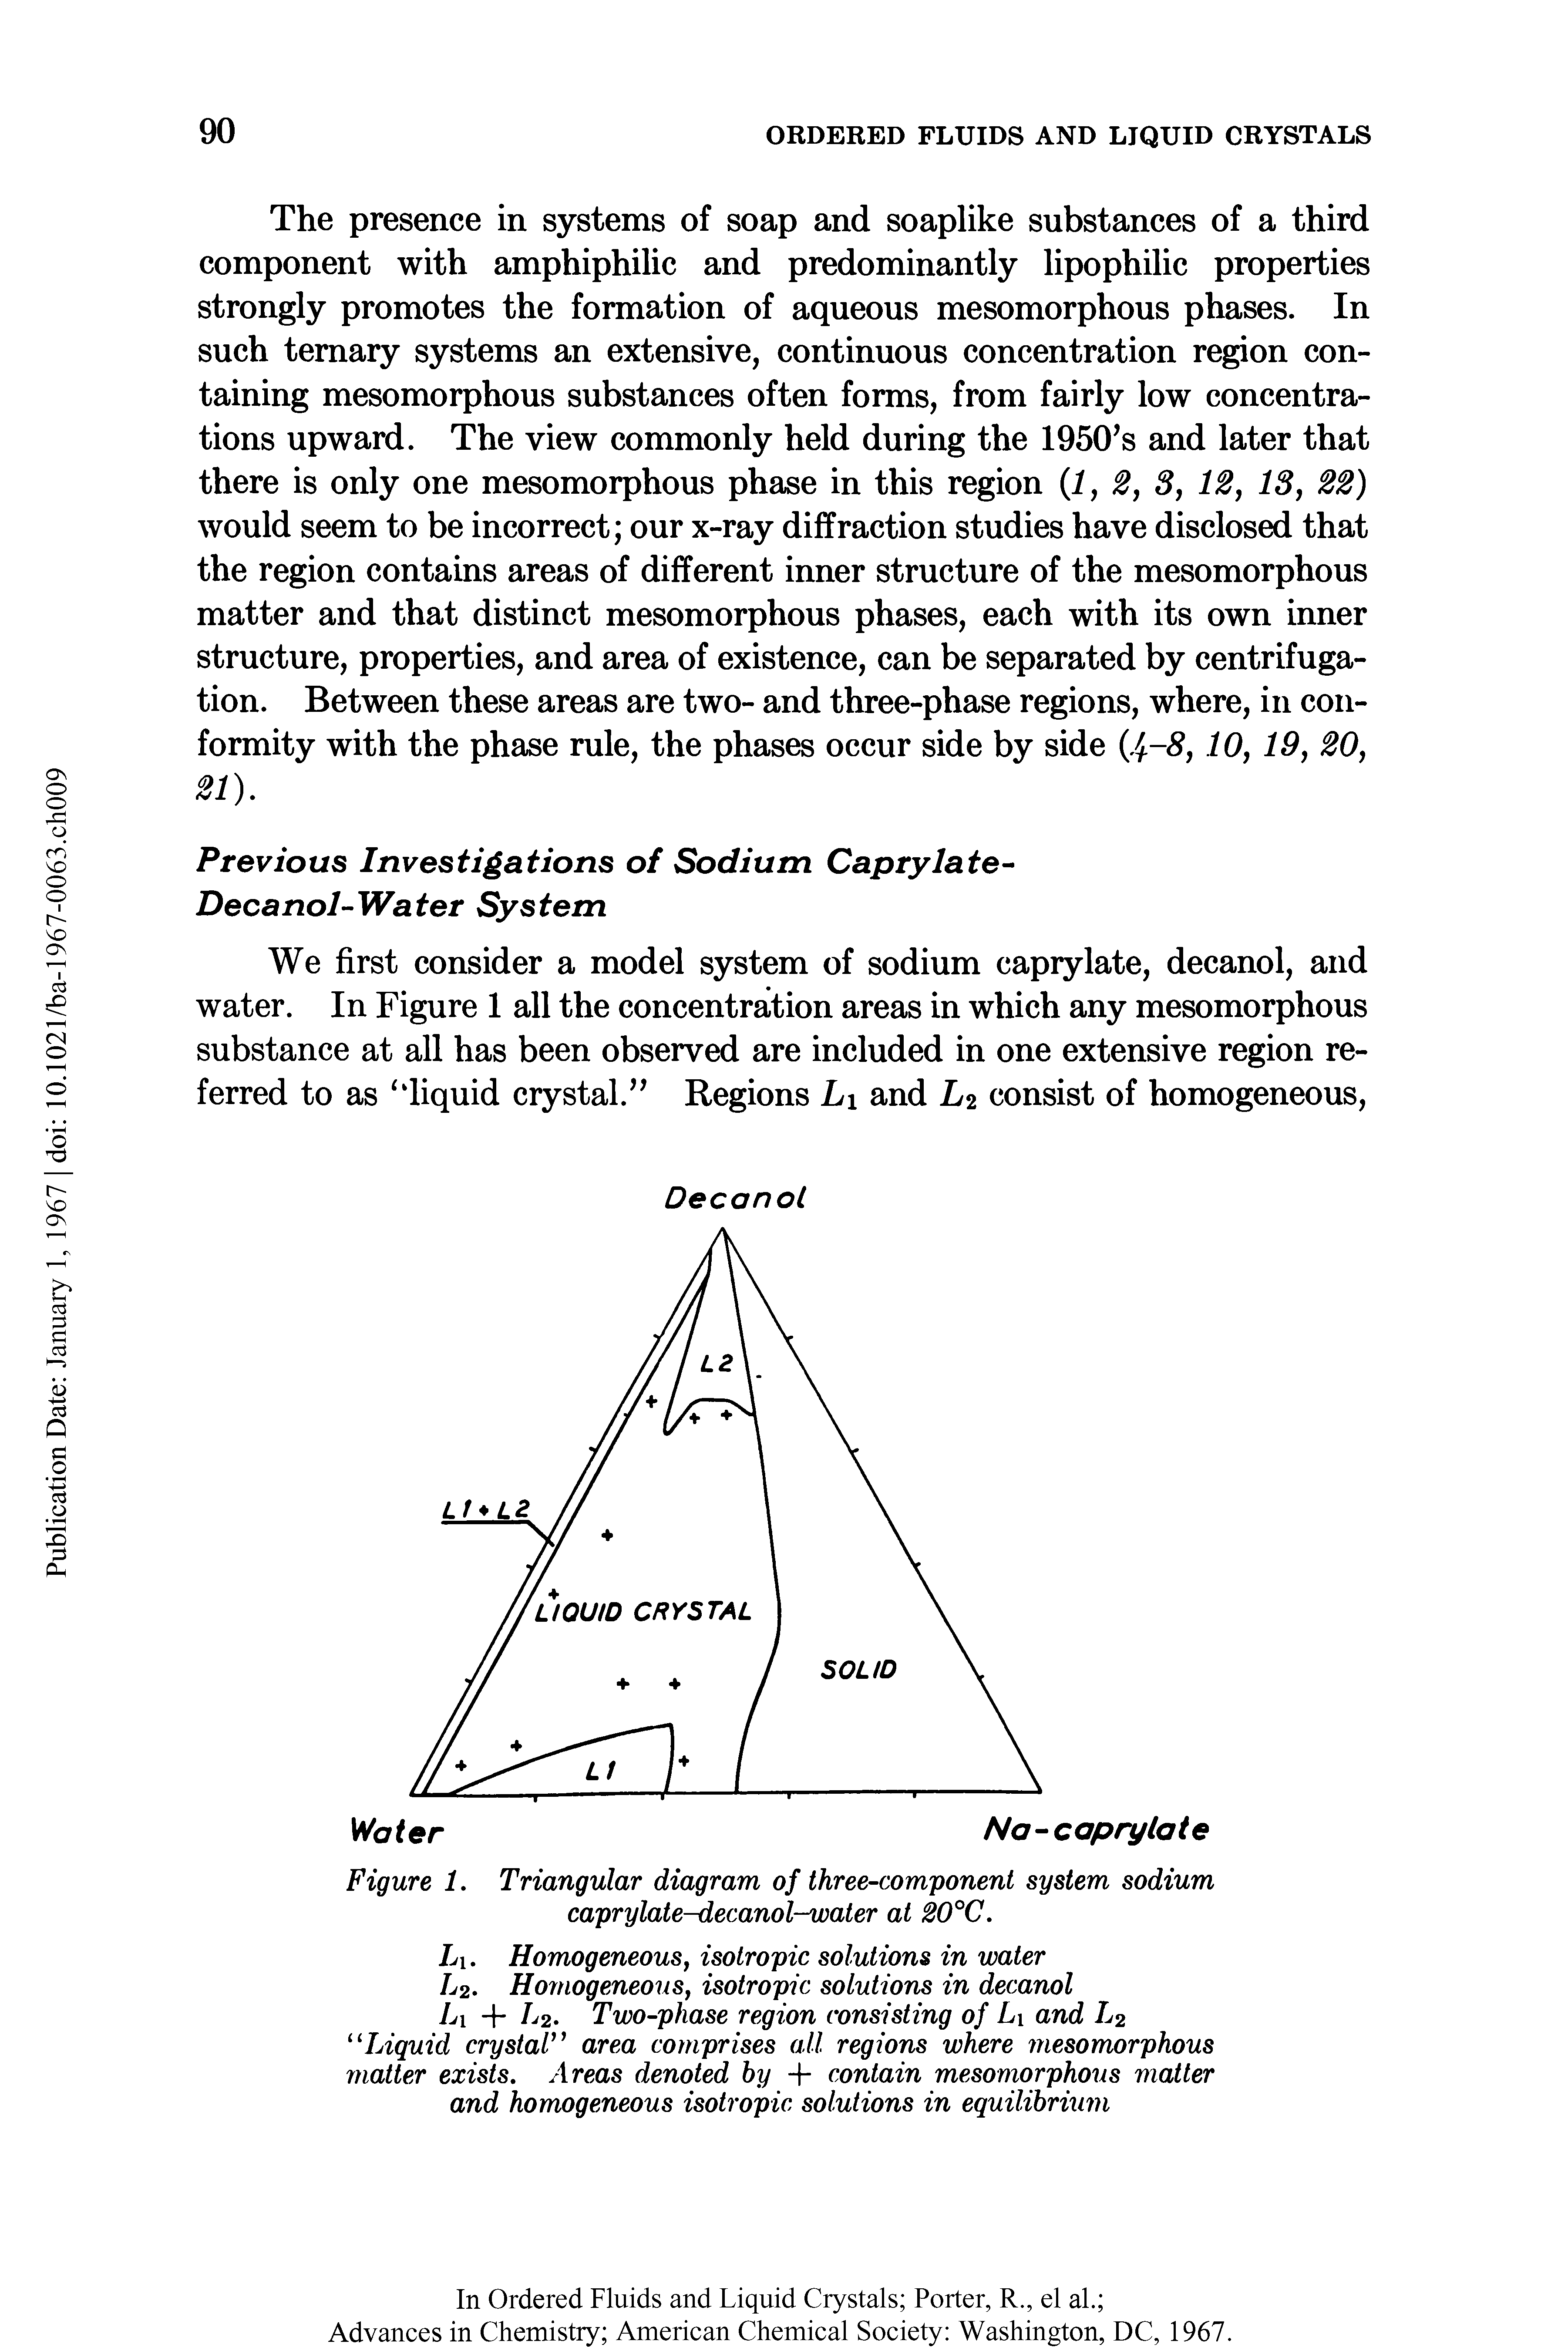 Figure 1. Triangular diagram of three-component system sodium caprylate-decanol-water at 20°C.